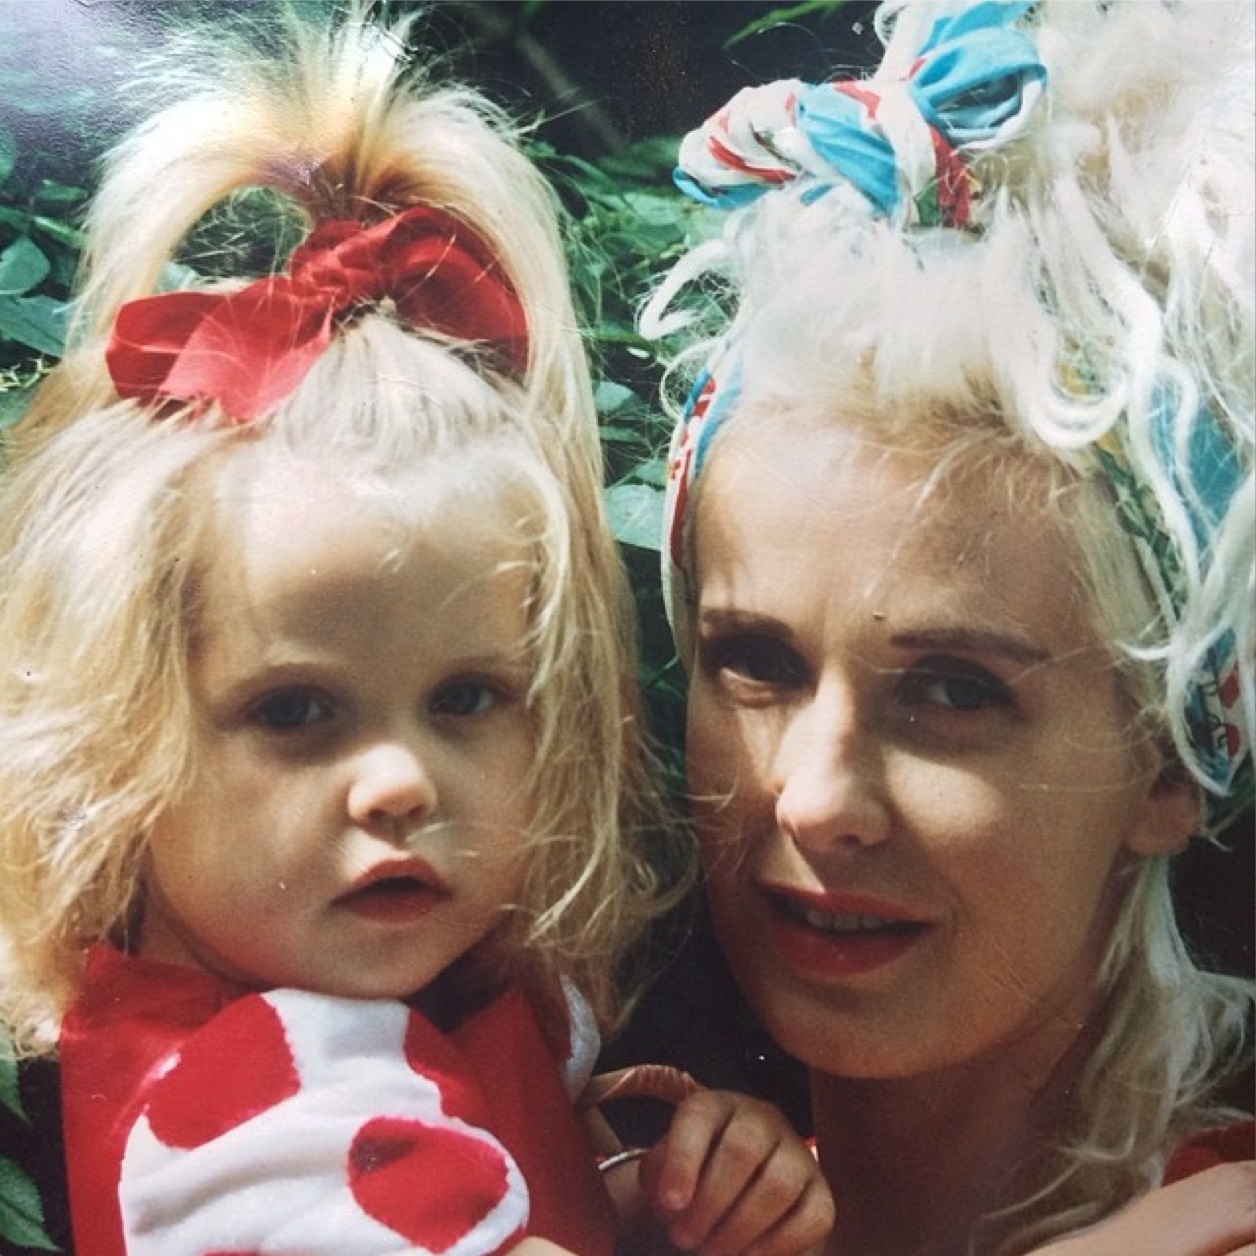 Peaches Geldof was $1 million in debt when she died of a heroin overdose